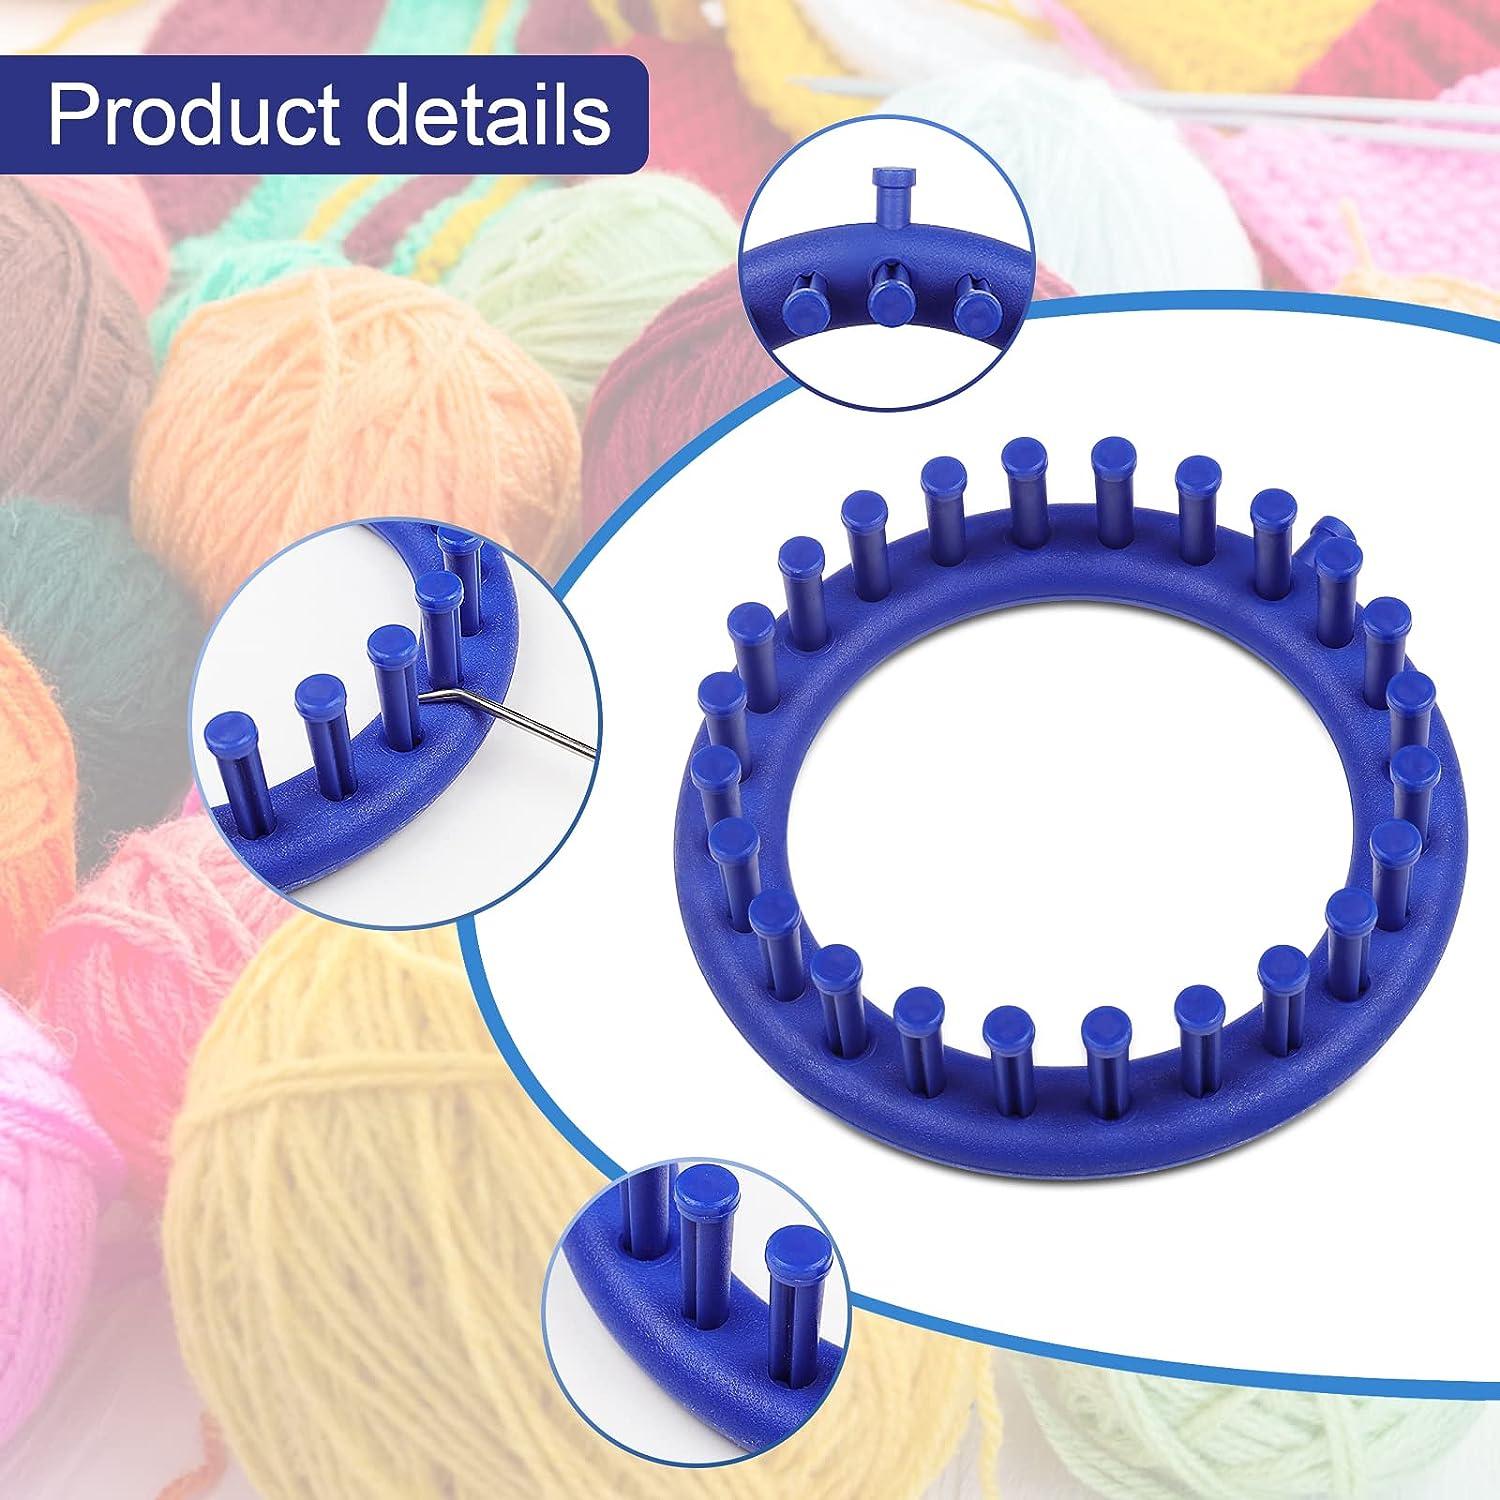 Round Knitting Loom Kit